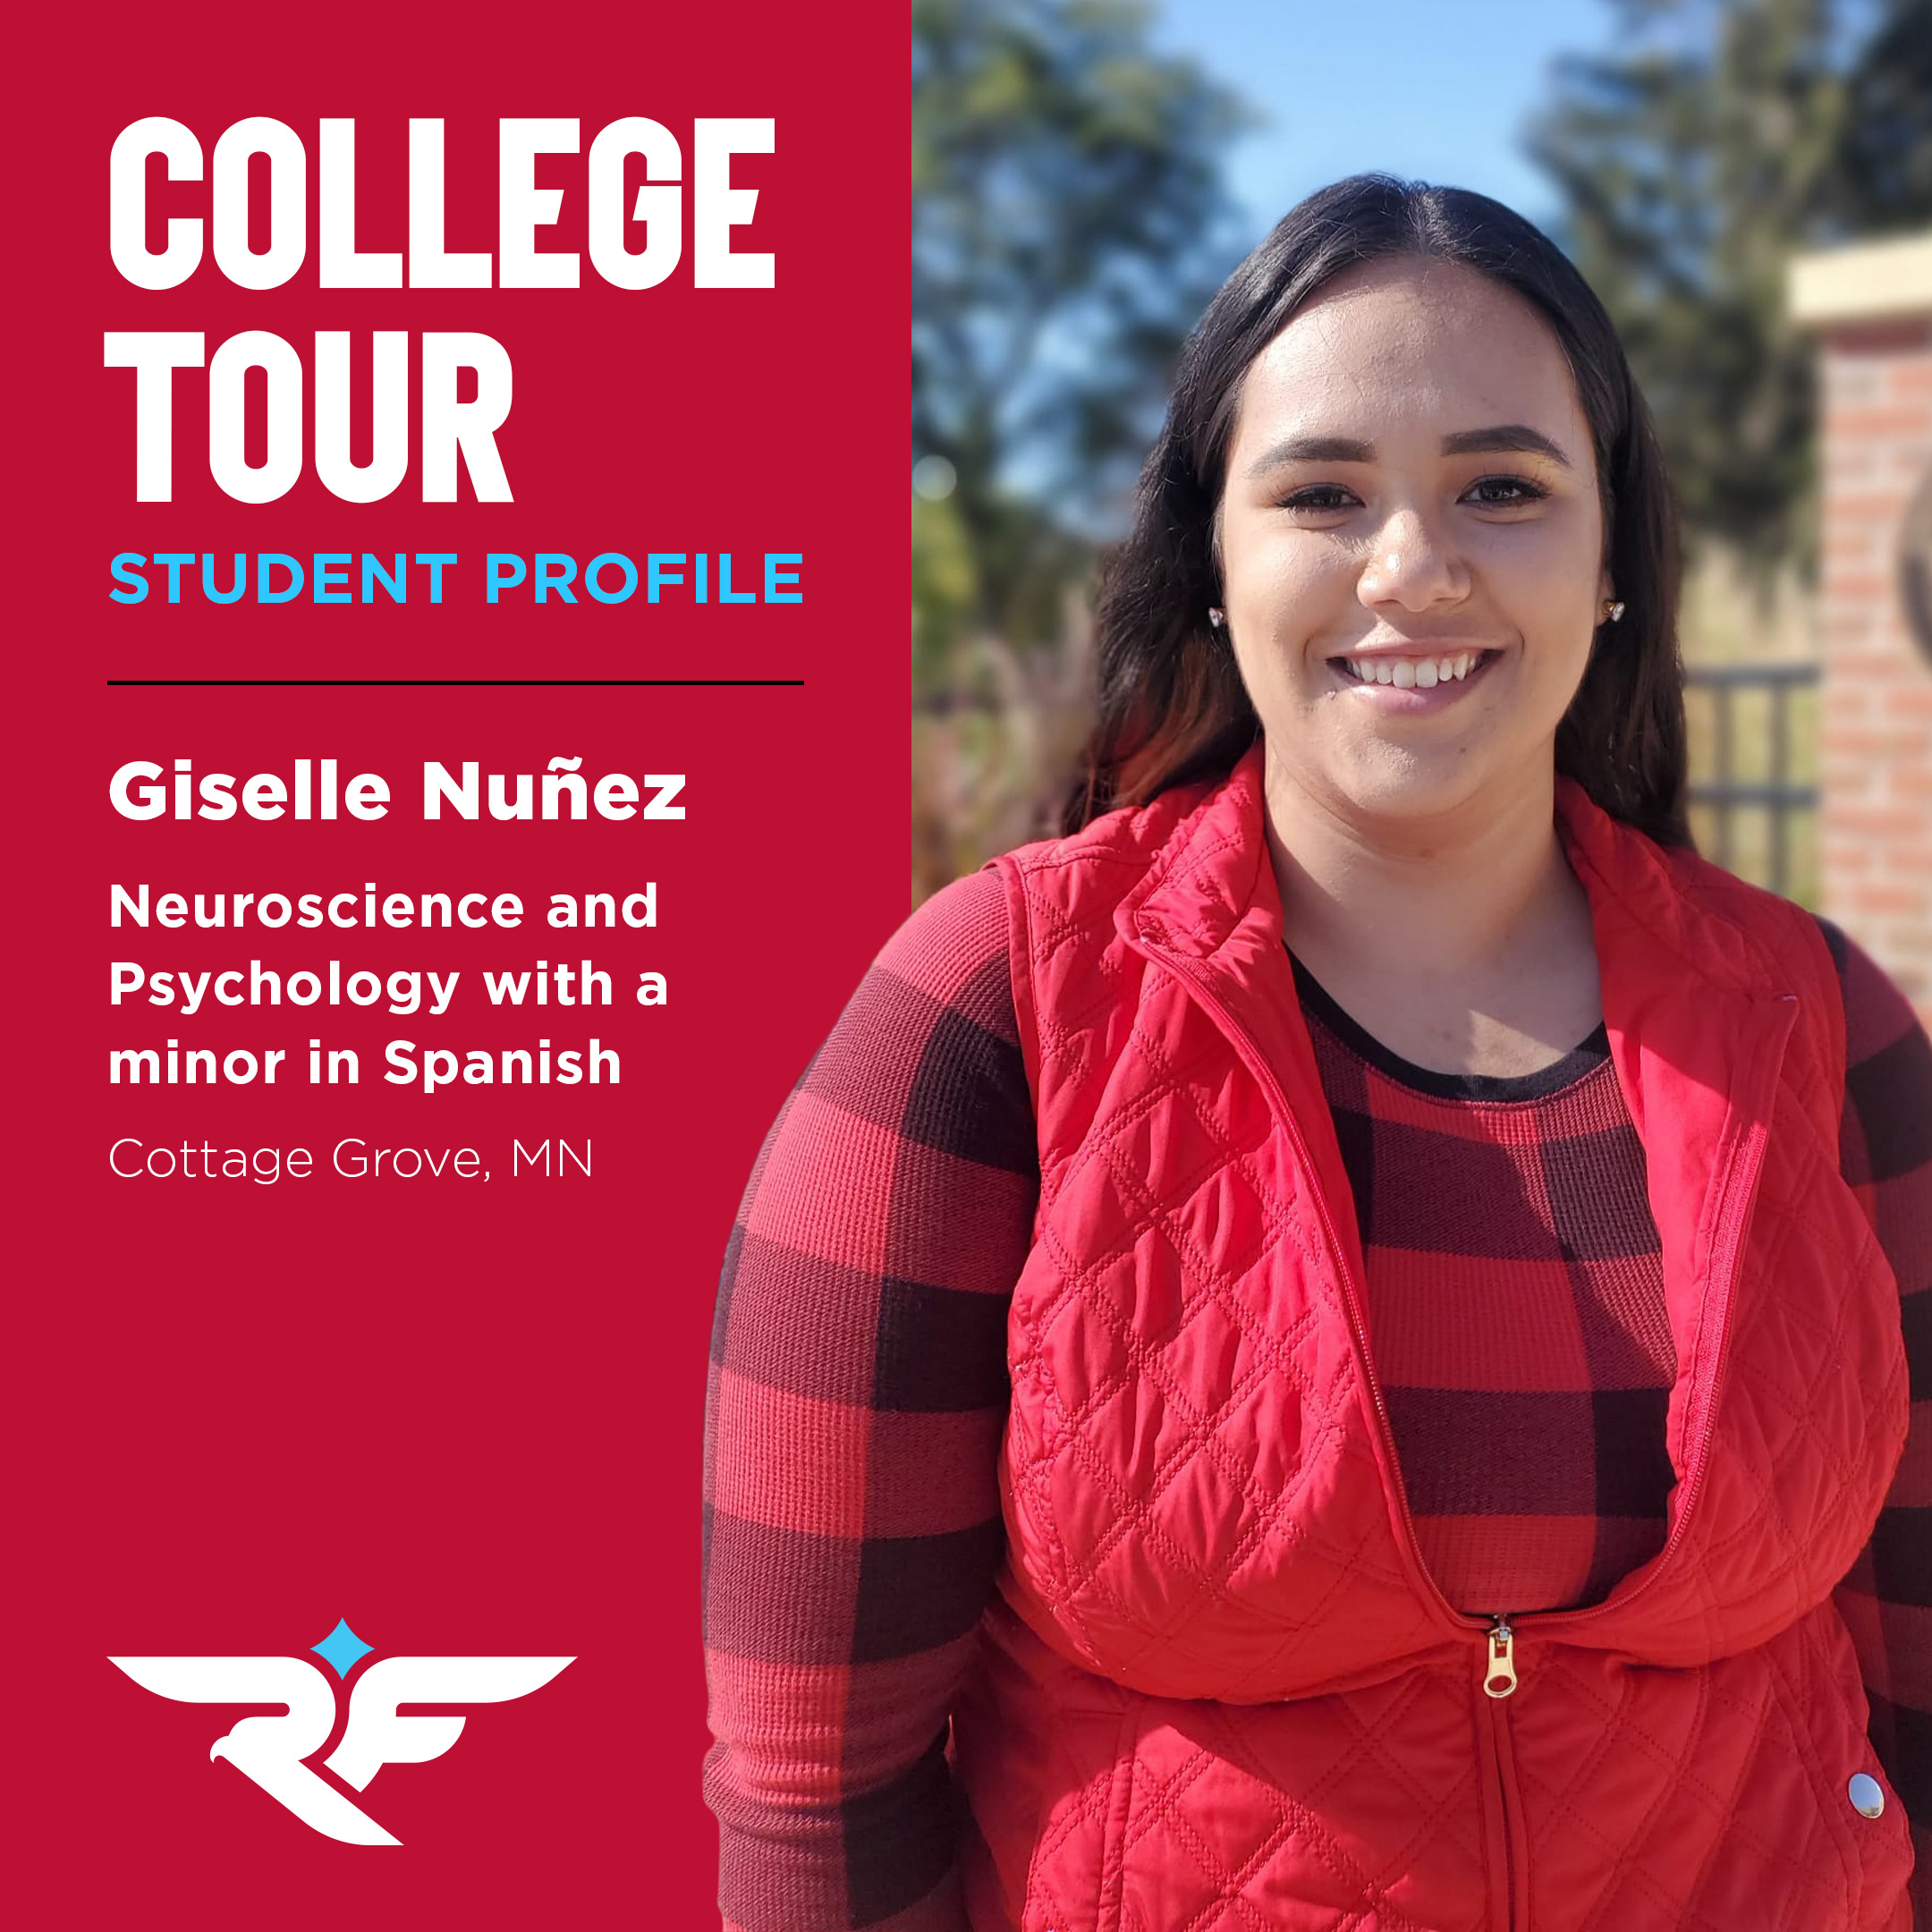 College Tour Giselle Nunez